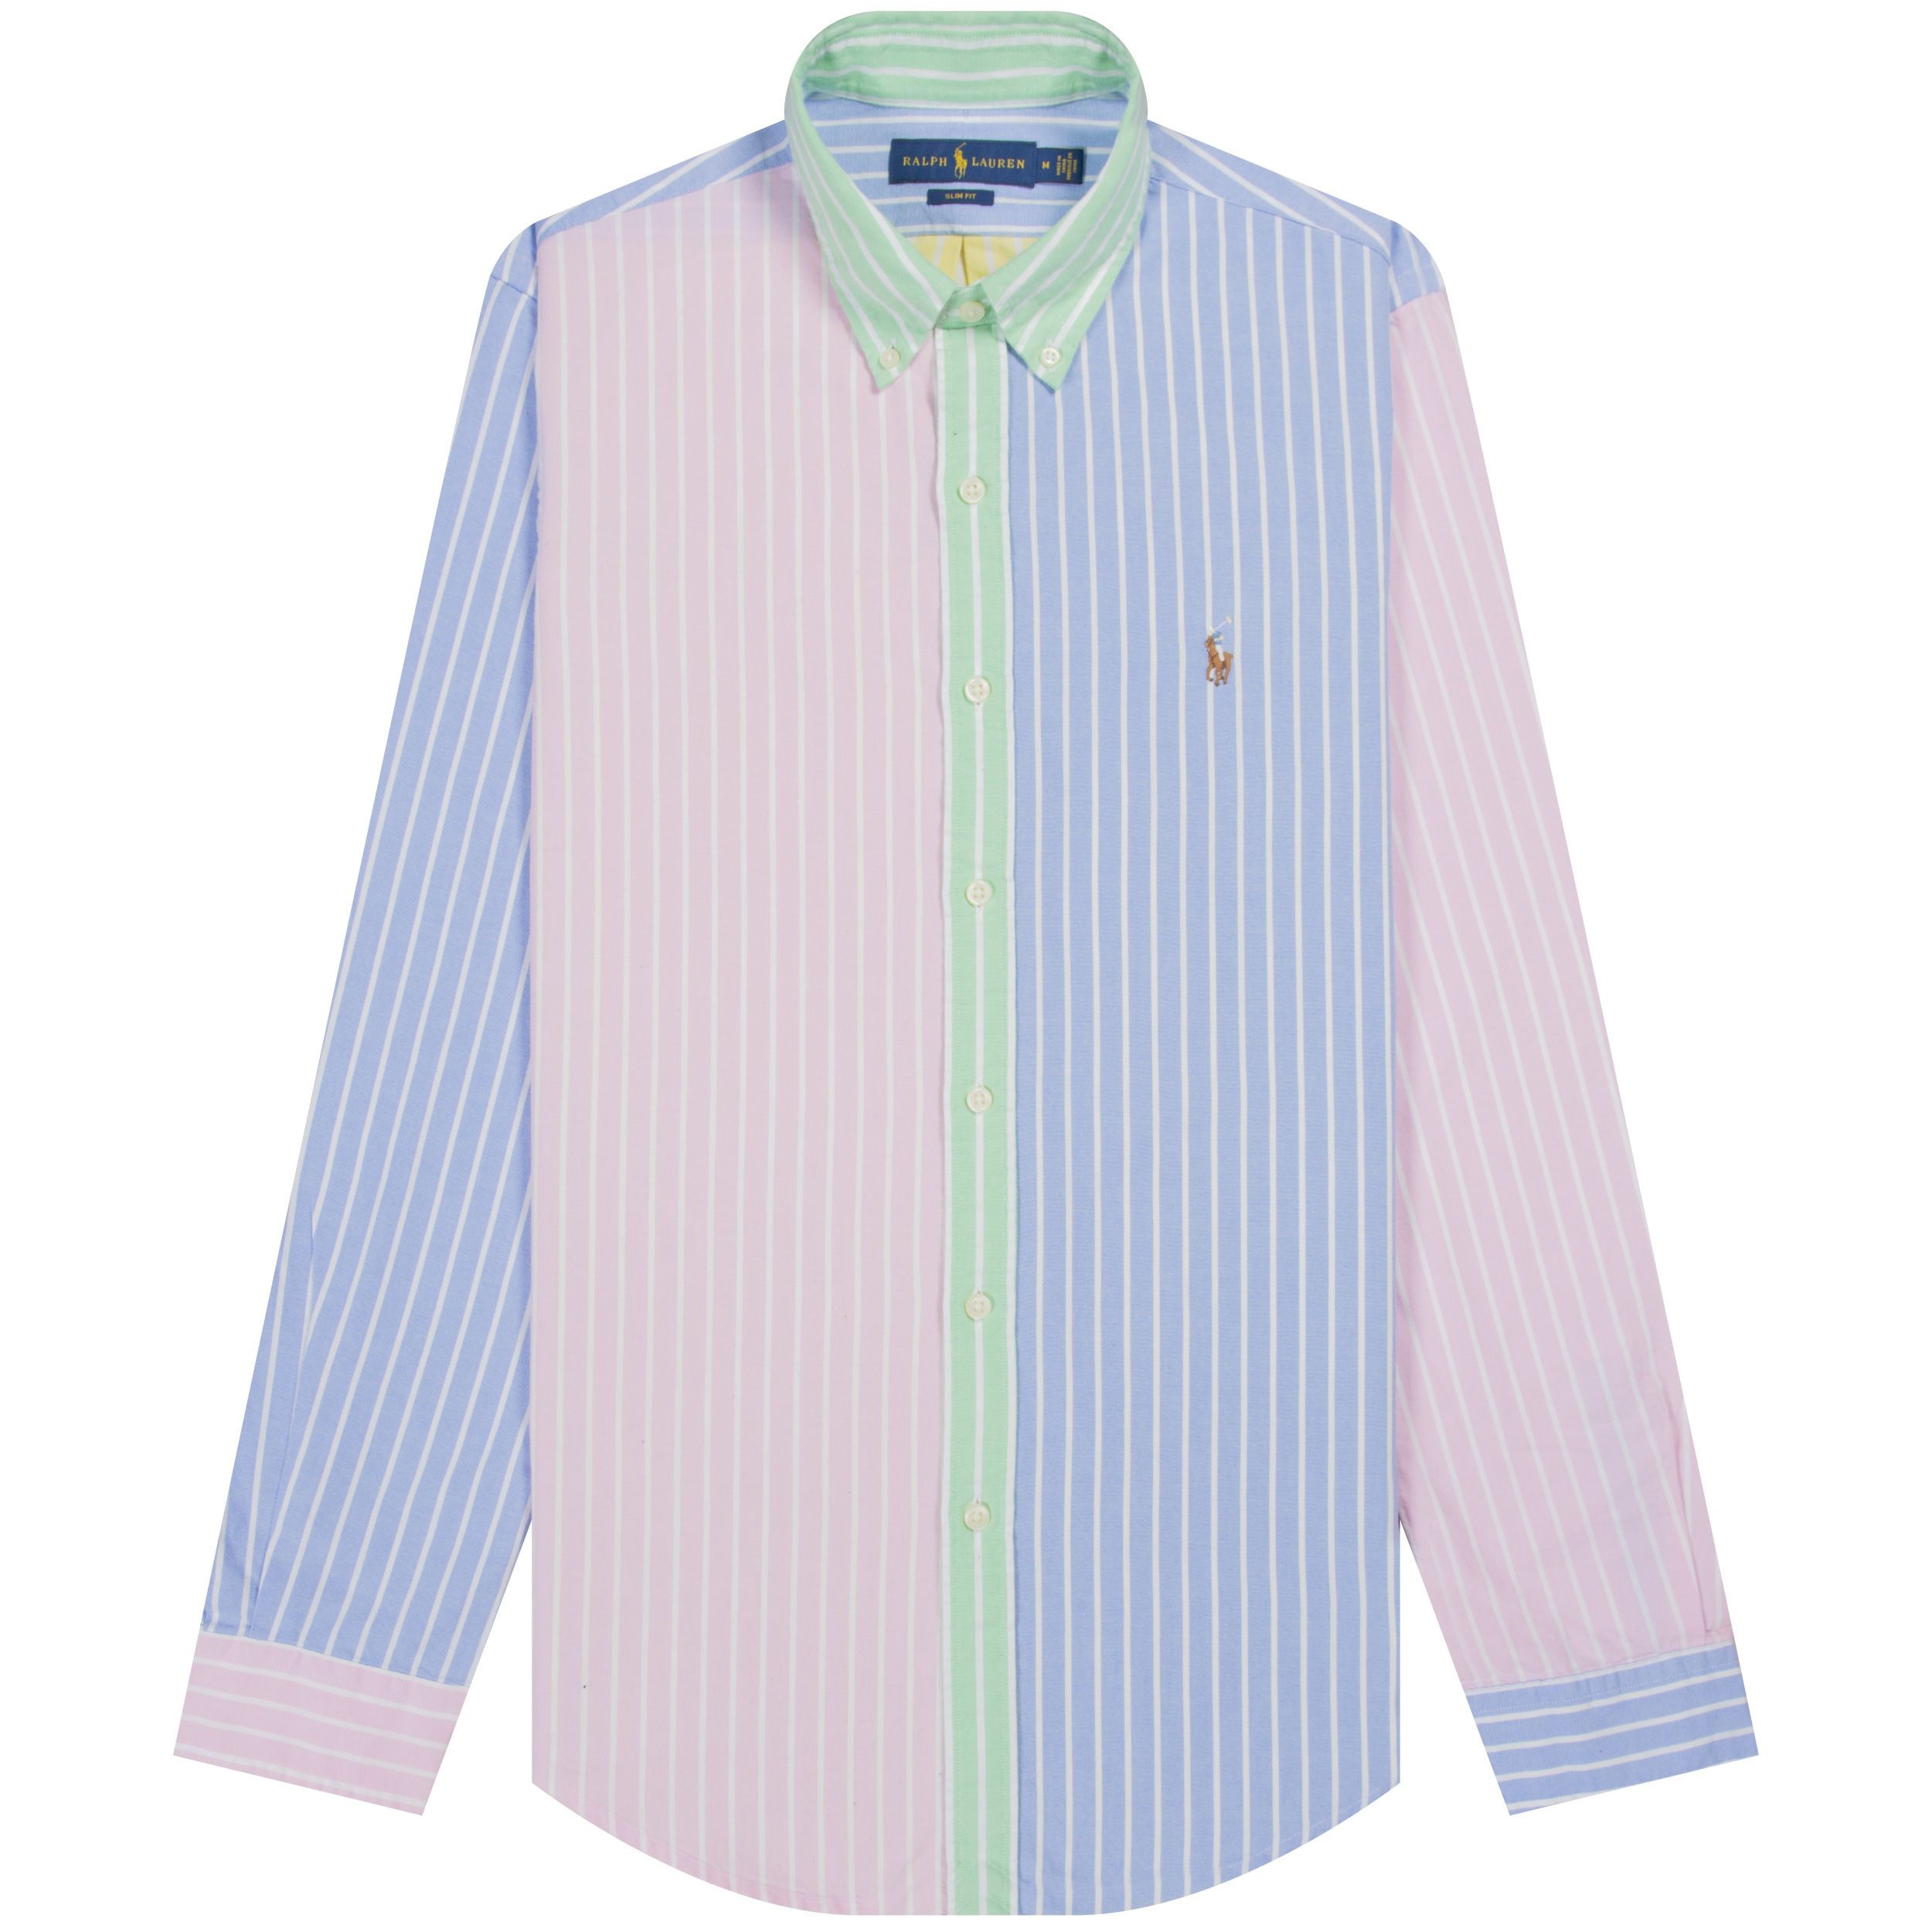 Polo Ralph Lauren Ralph Lauren 'Slim' Multi Striped Oxford Shirt Multi